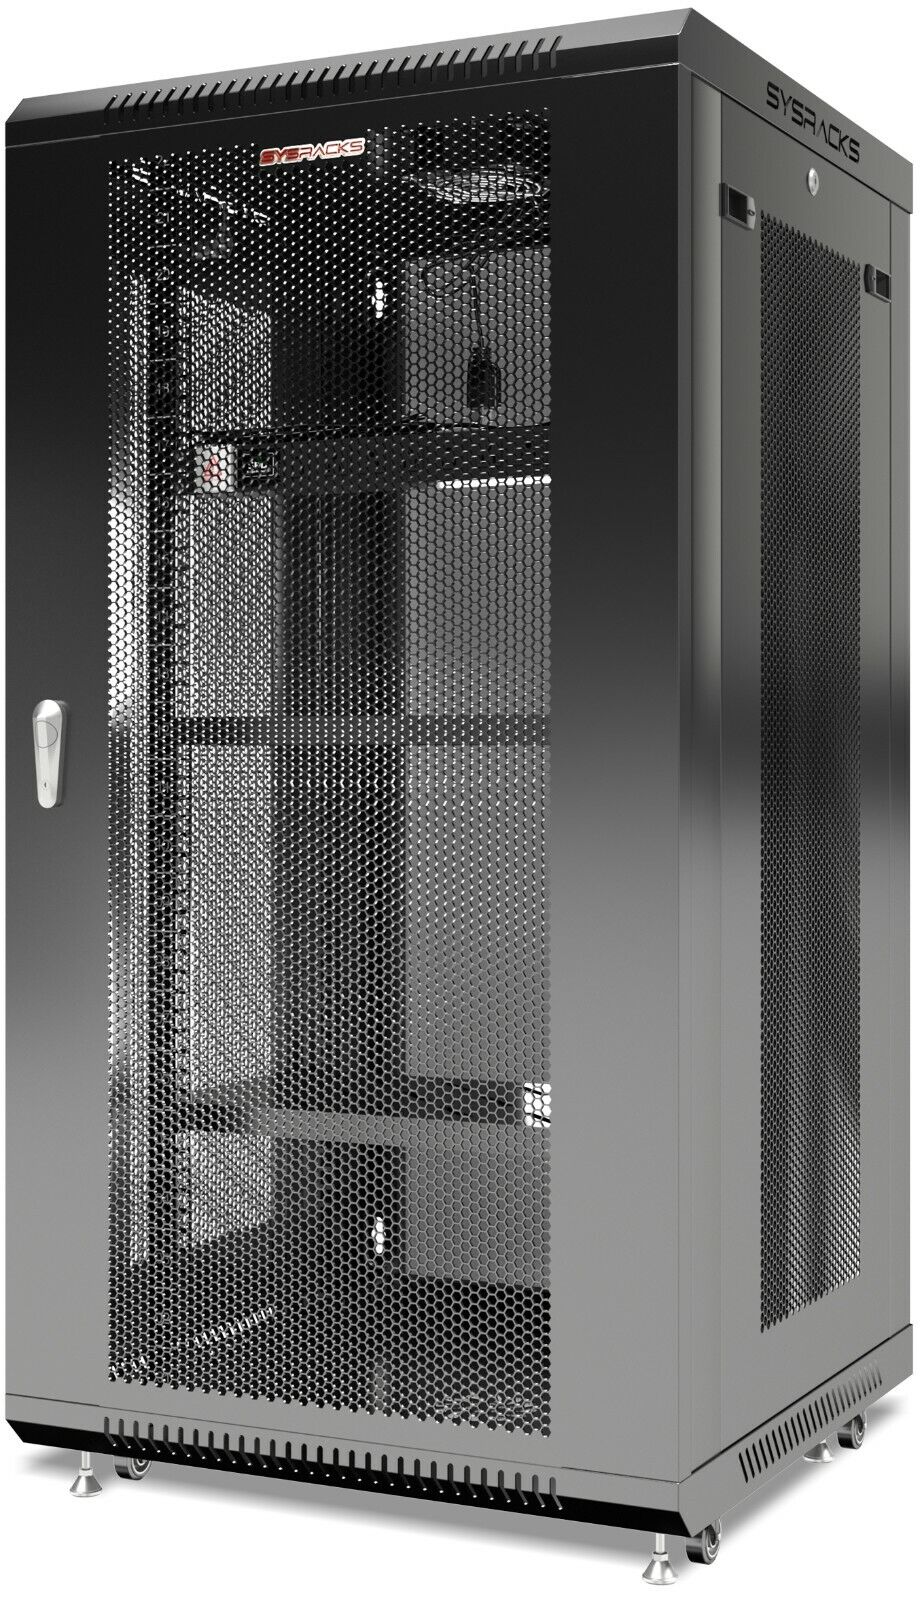 Server Rack 22U Wall Mount Cabinet Locking Networking Data Enclosure VENTED Door